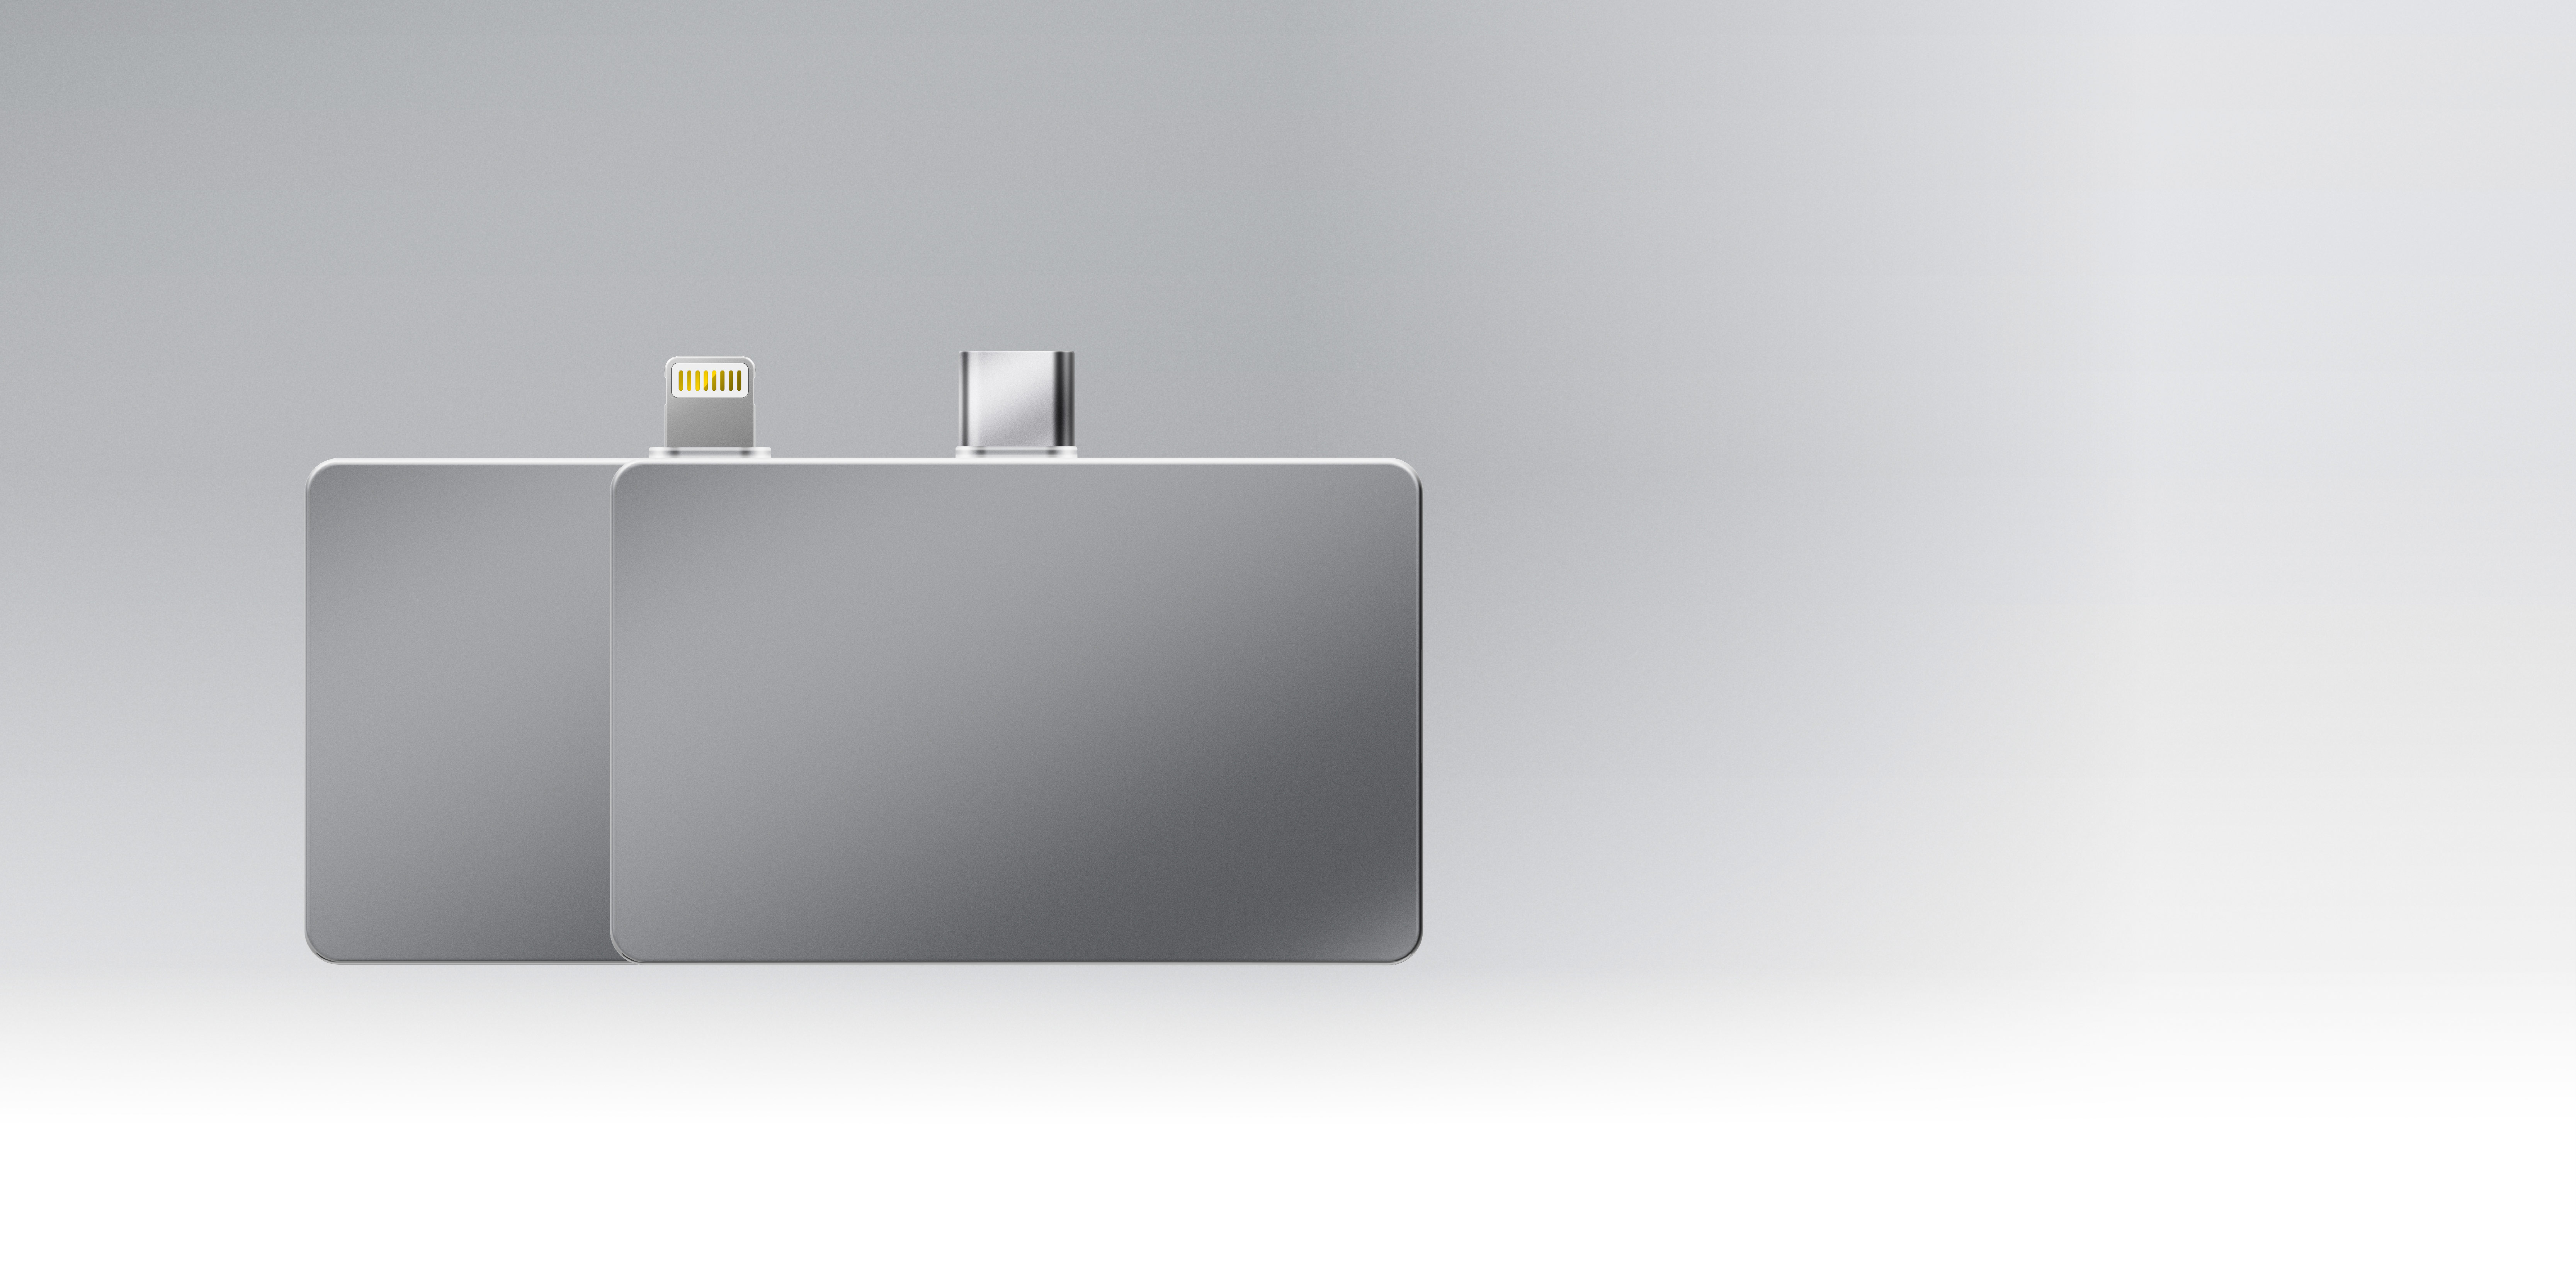 FEITIAN iR301 series Smart Card Reader has a high-end, fashion, all metal casing design